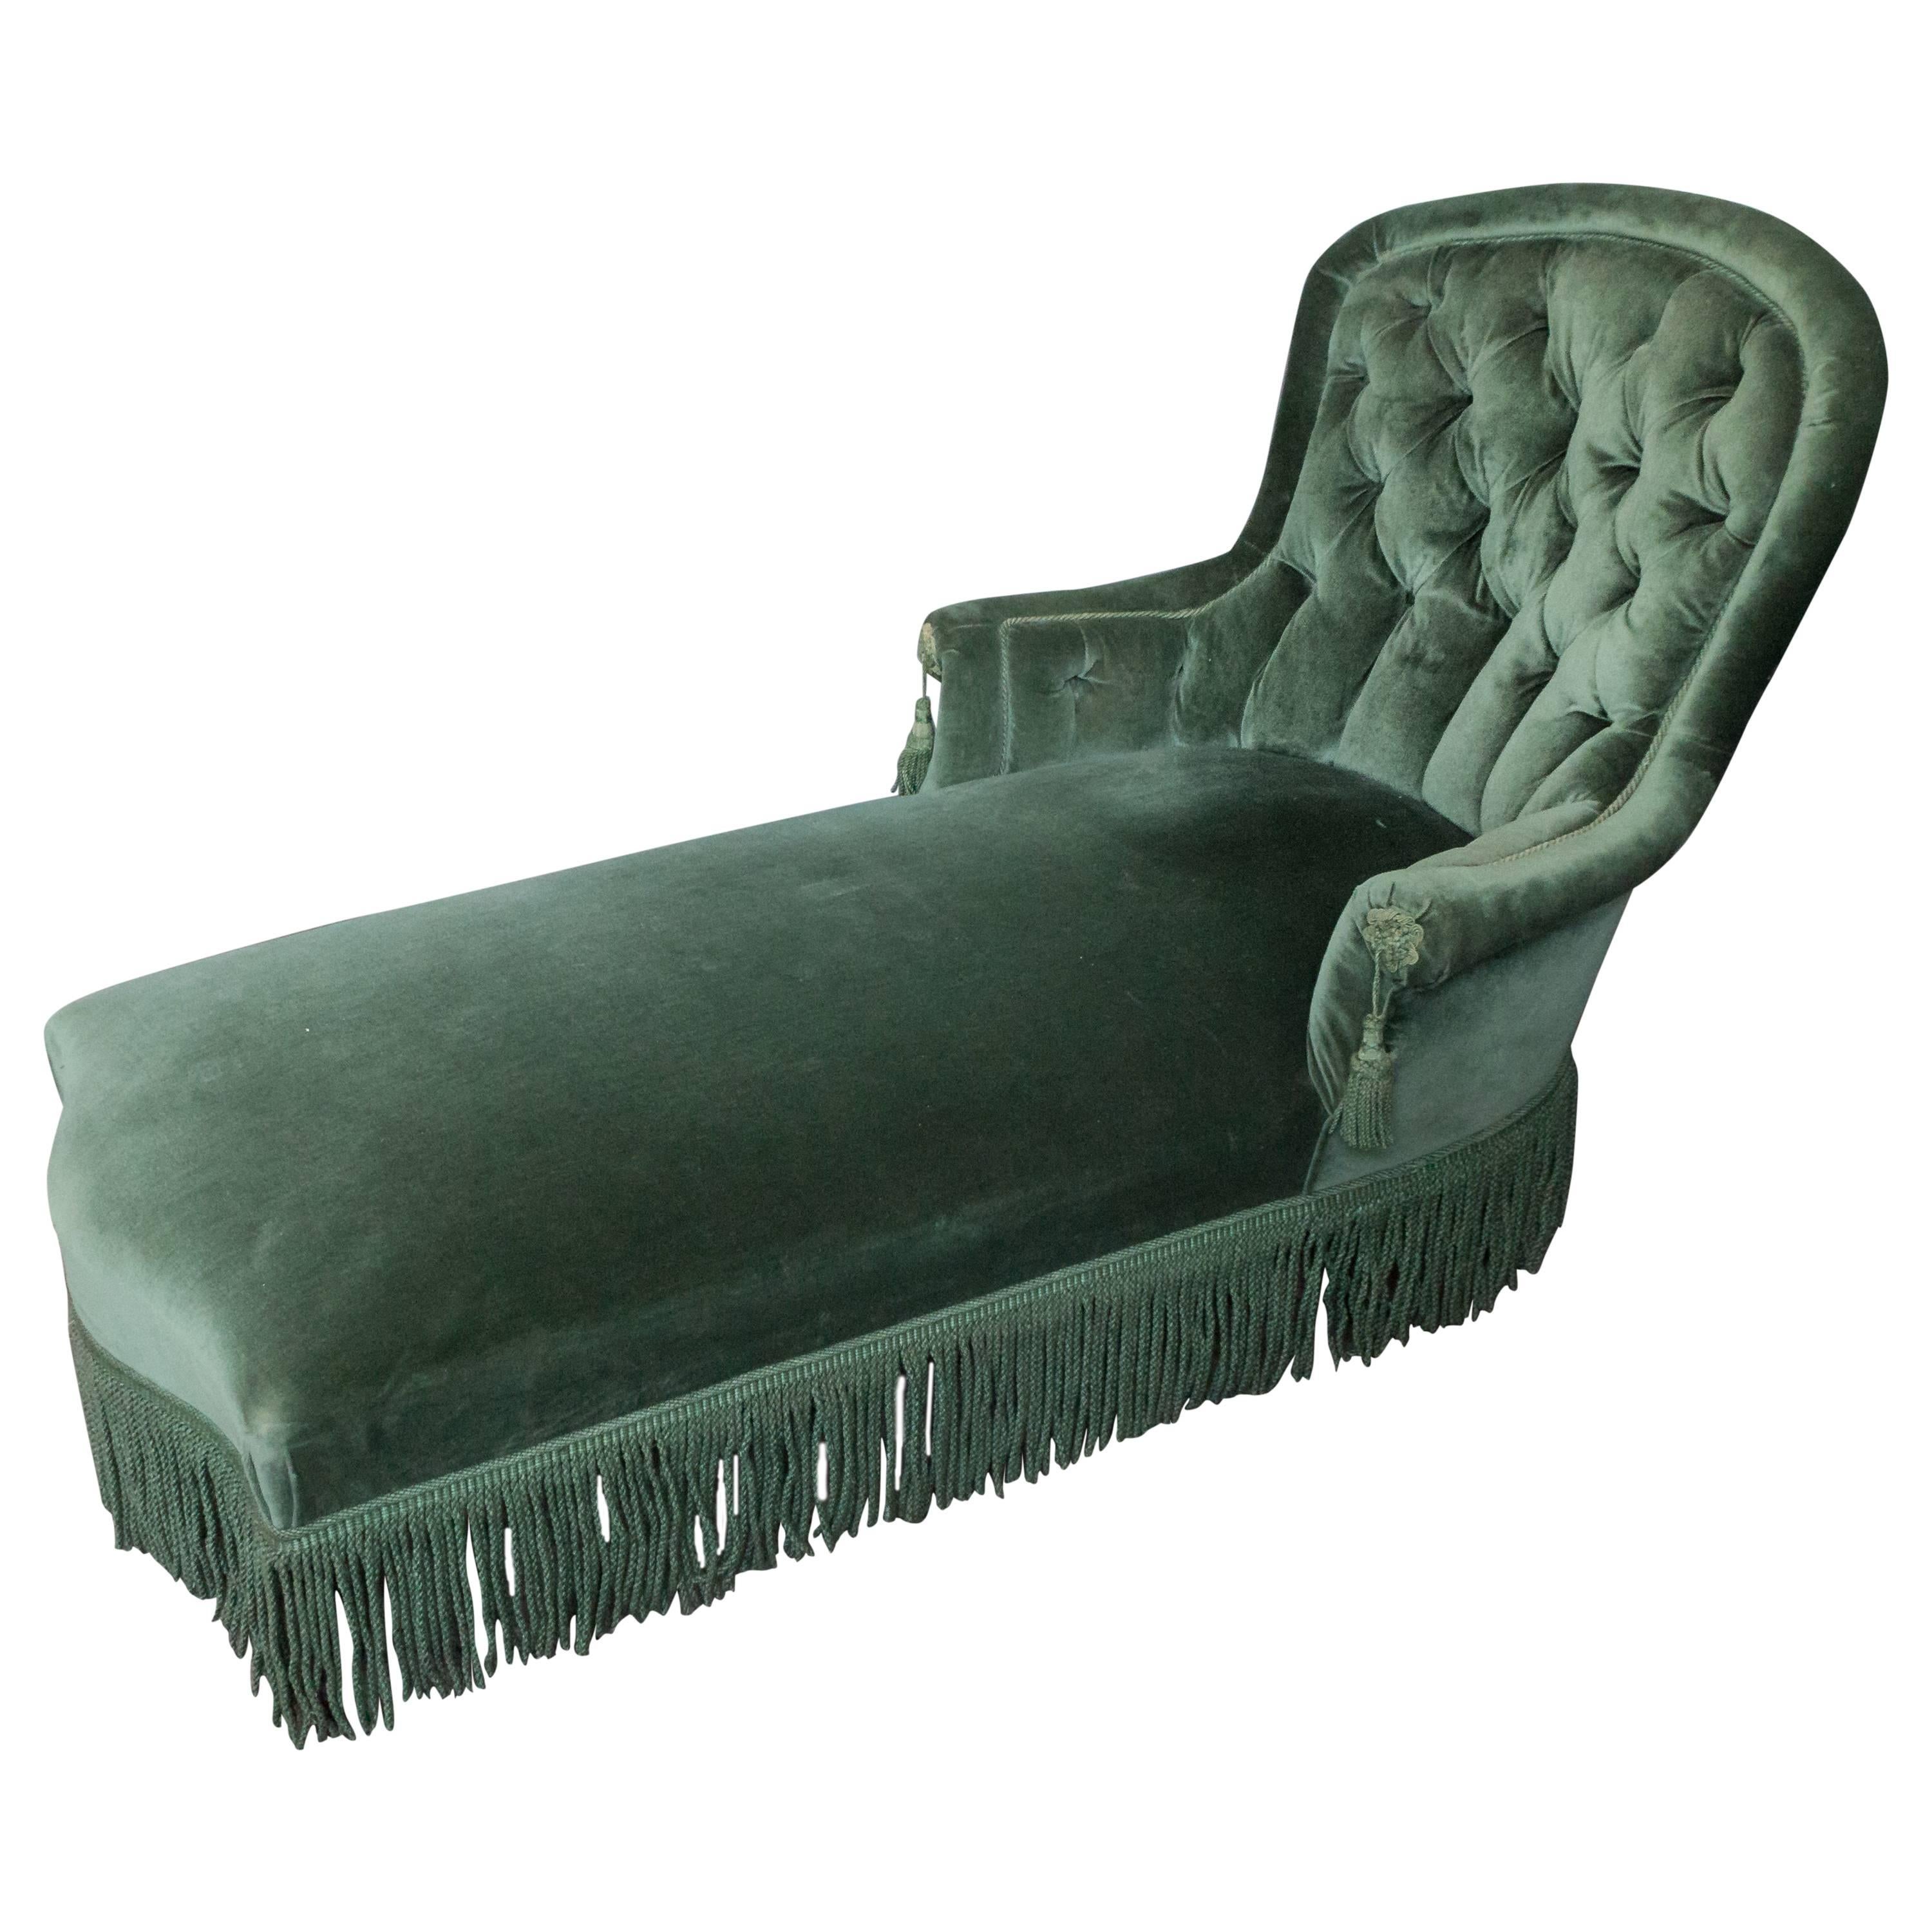 French Napoleon III Period Green Velvet Chaise Lounge